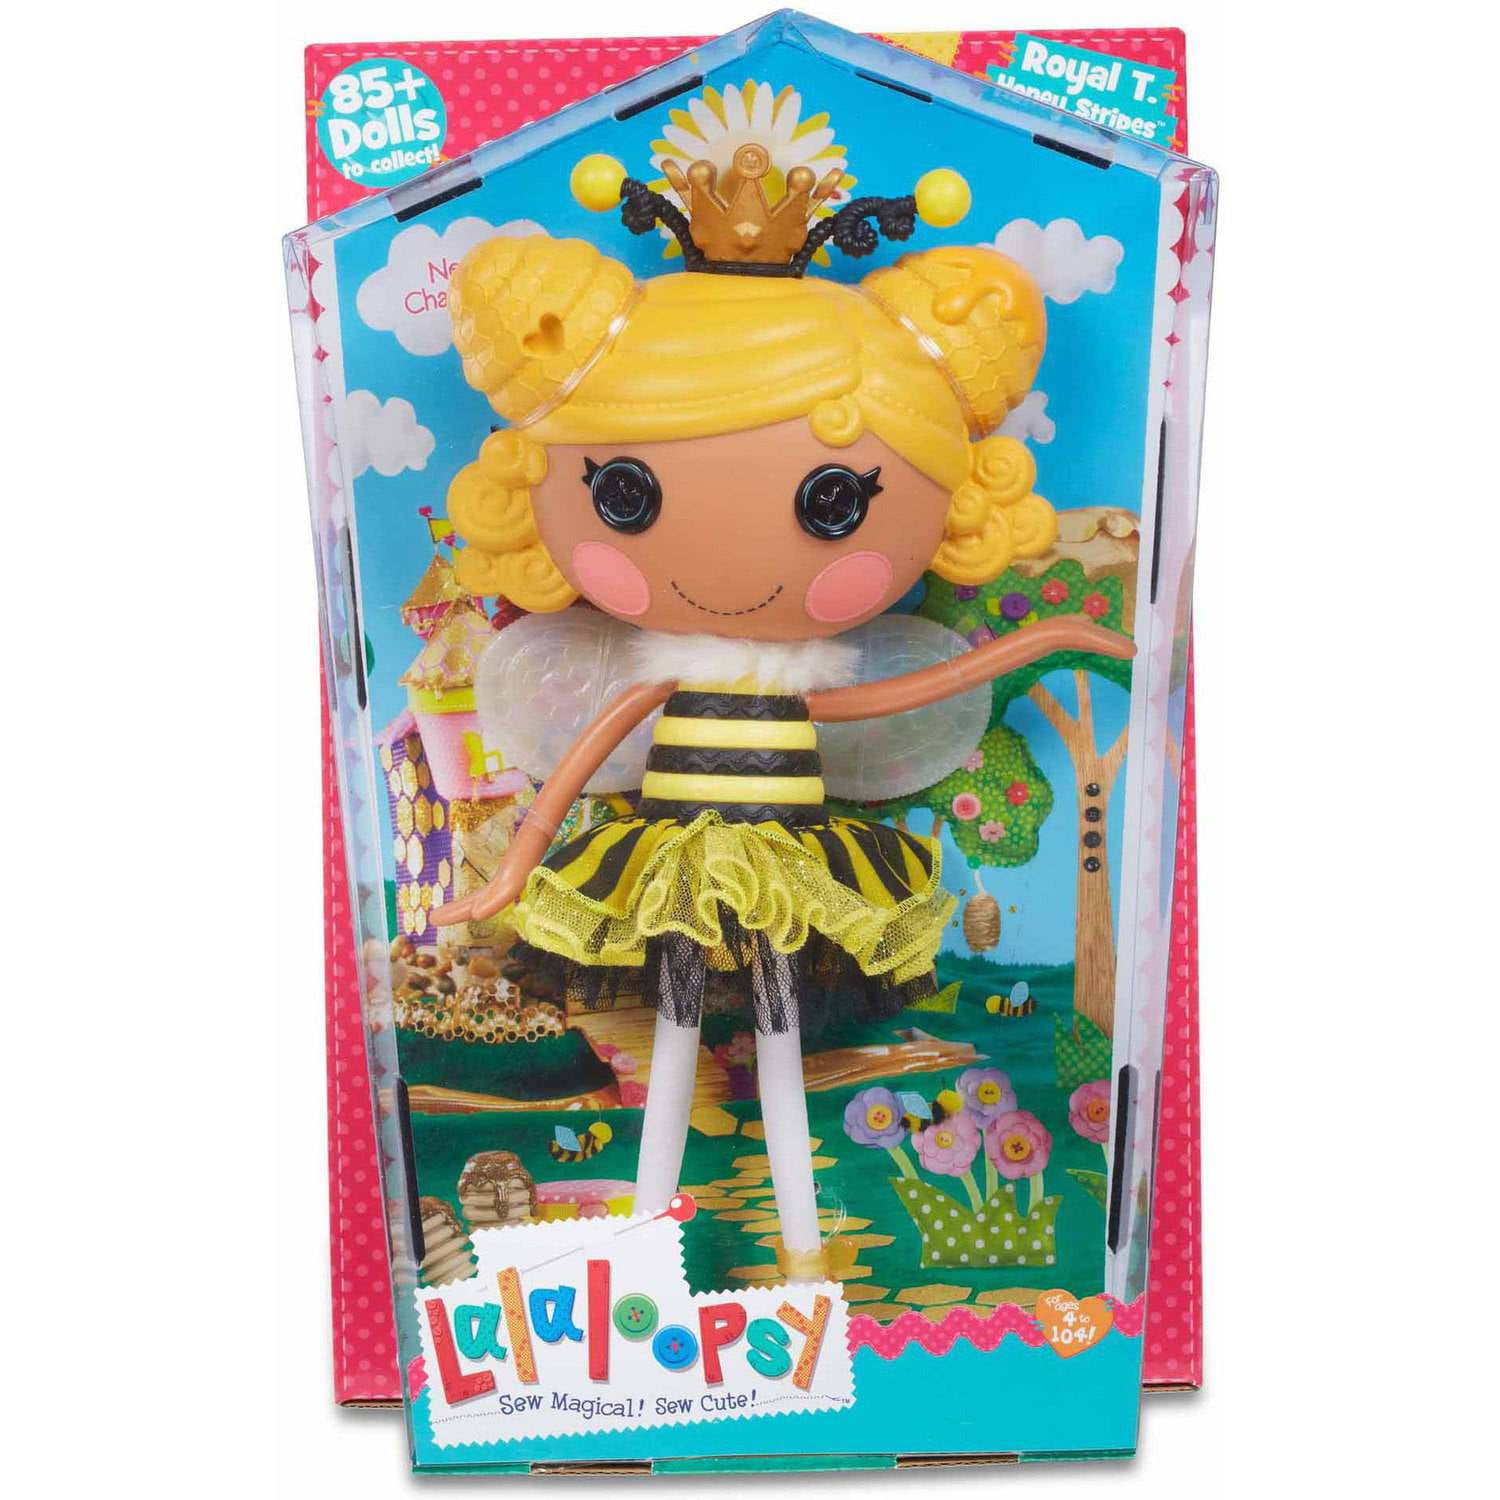 Lalaloopsy Royal T. Honey Stripes Doll - Walmart.com